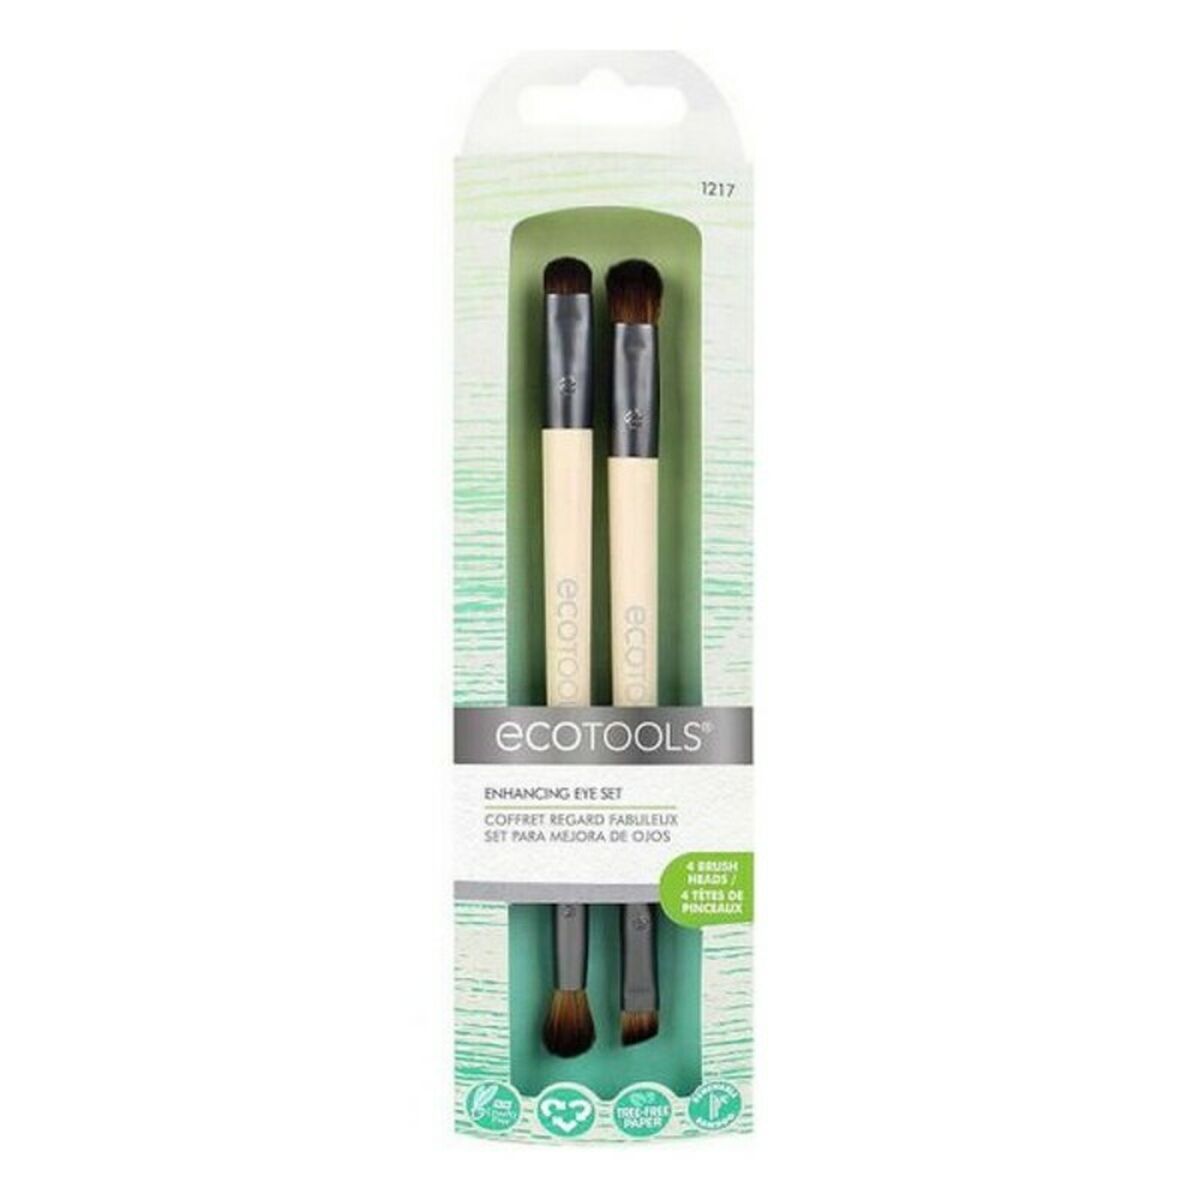 Set of Make-up Brushes Eye Enhancing Ecotools 1217 (2 pcs) 2 Pieces | Ecotools | Aylal Beauty